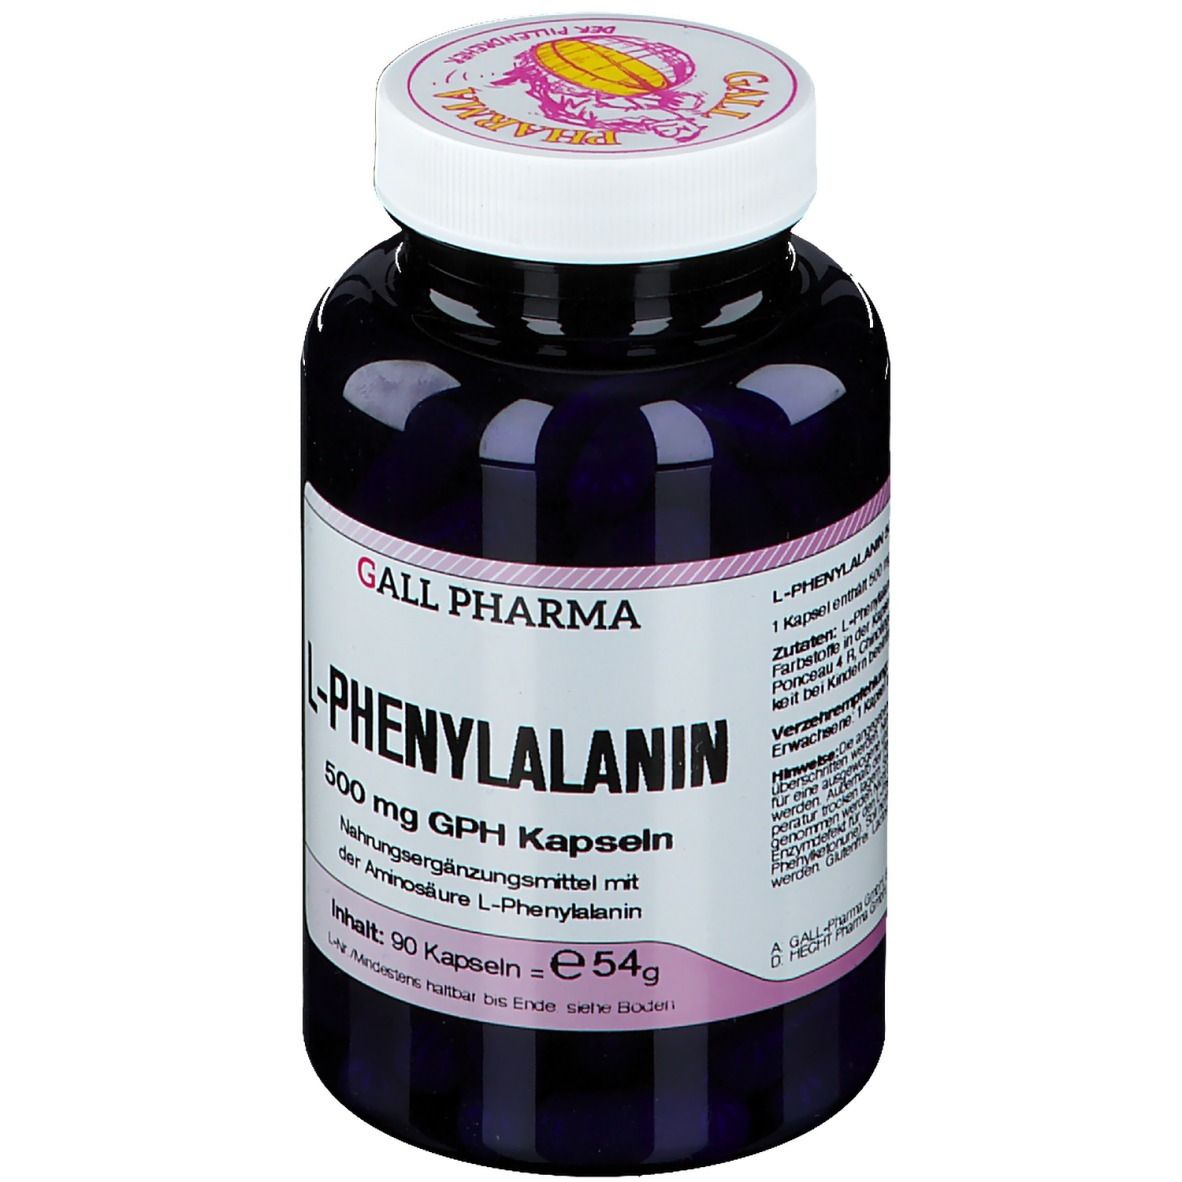 GALL PHARMA L-Phenylalanin 500 mg GPH